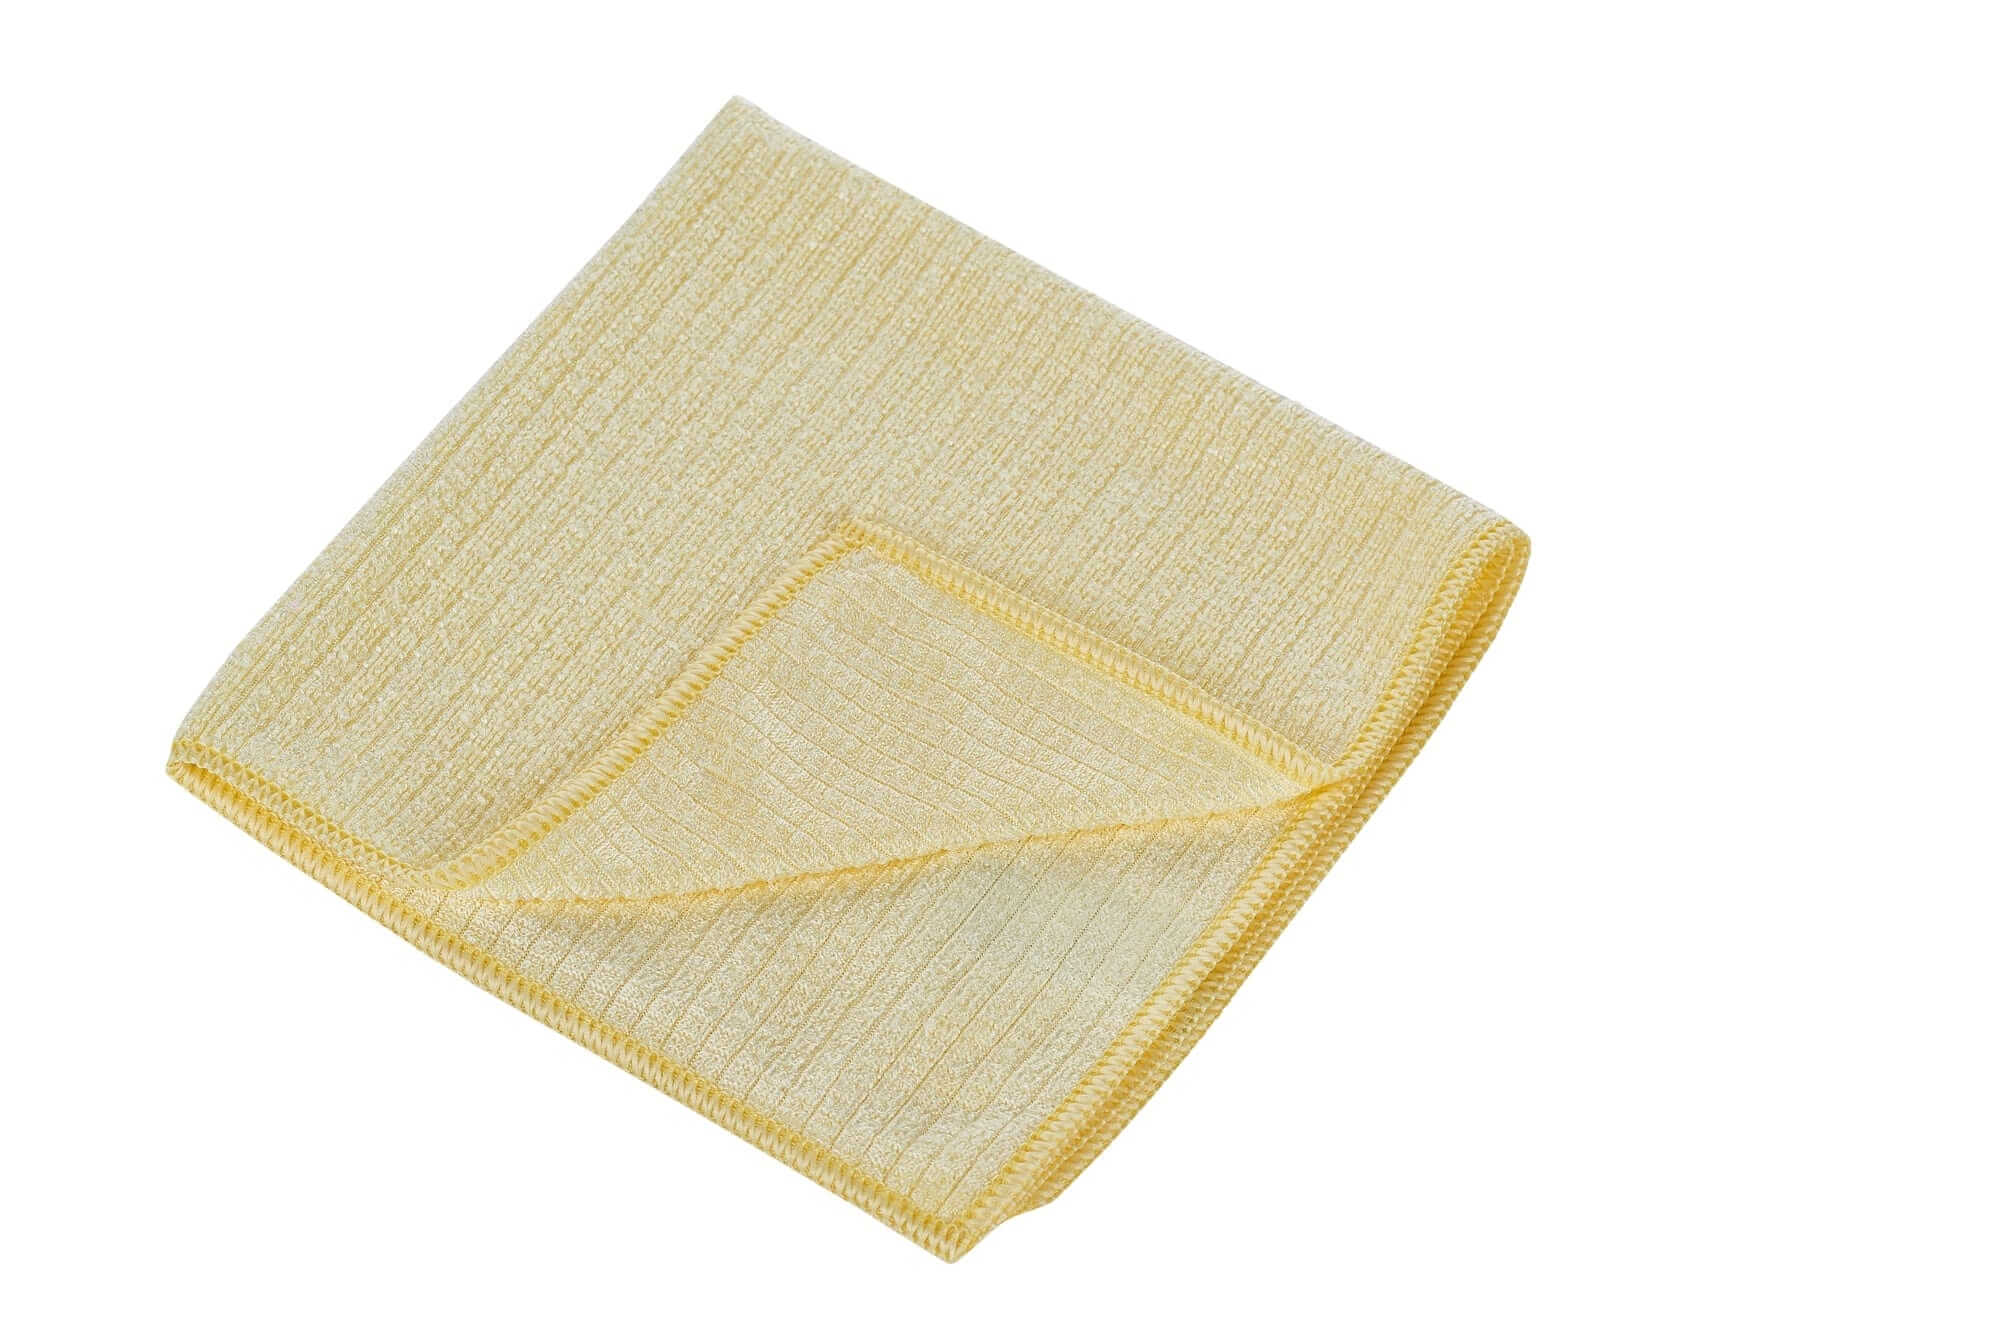 Soft microfibre cloth - yellow